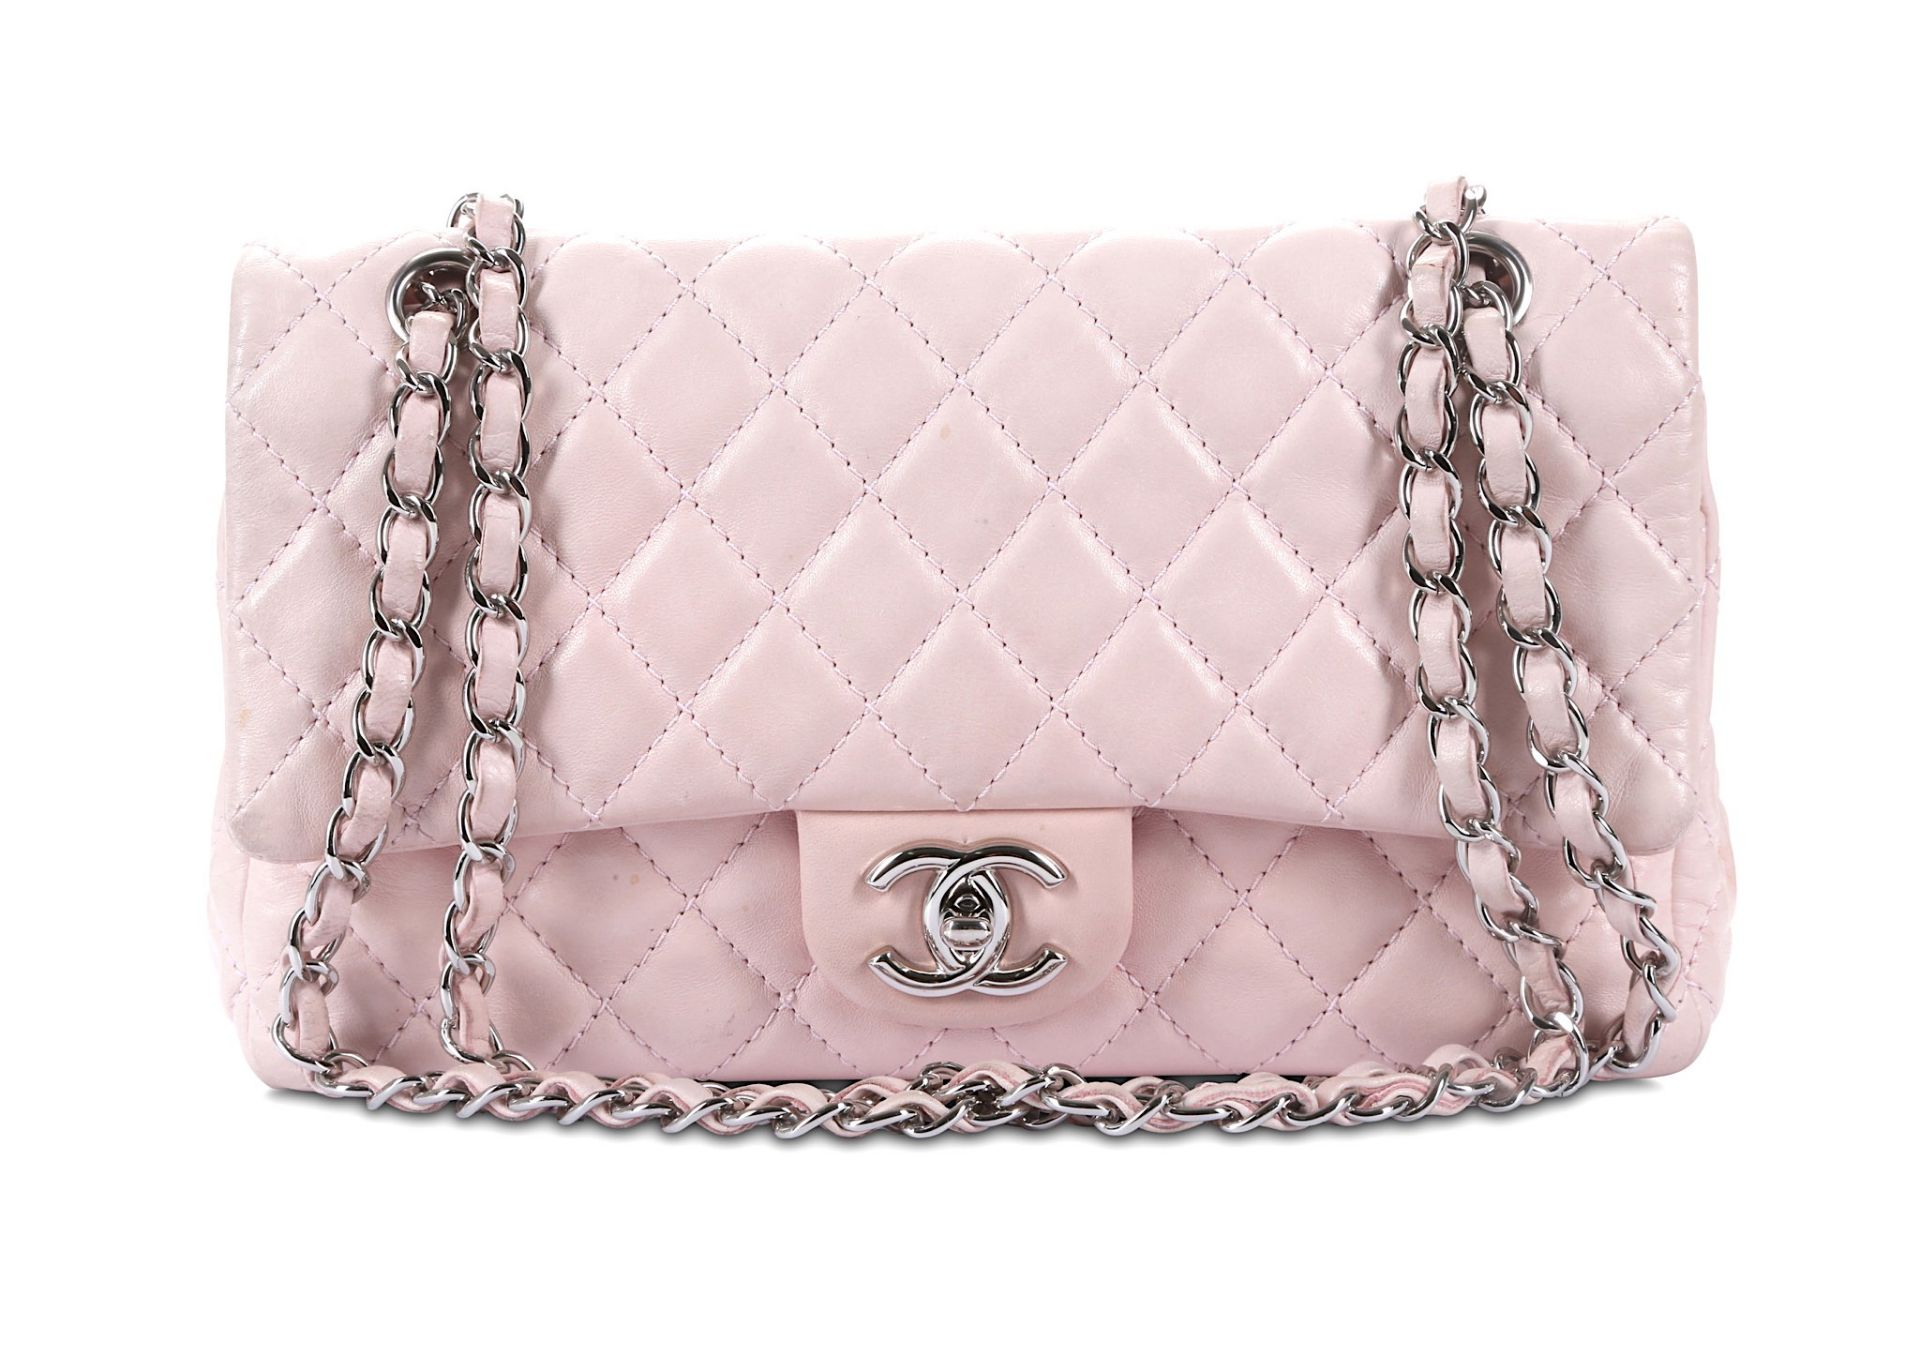 Chanel Light Pink Classic 2.55 Medium Bag, c. 2008